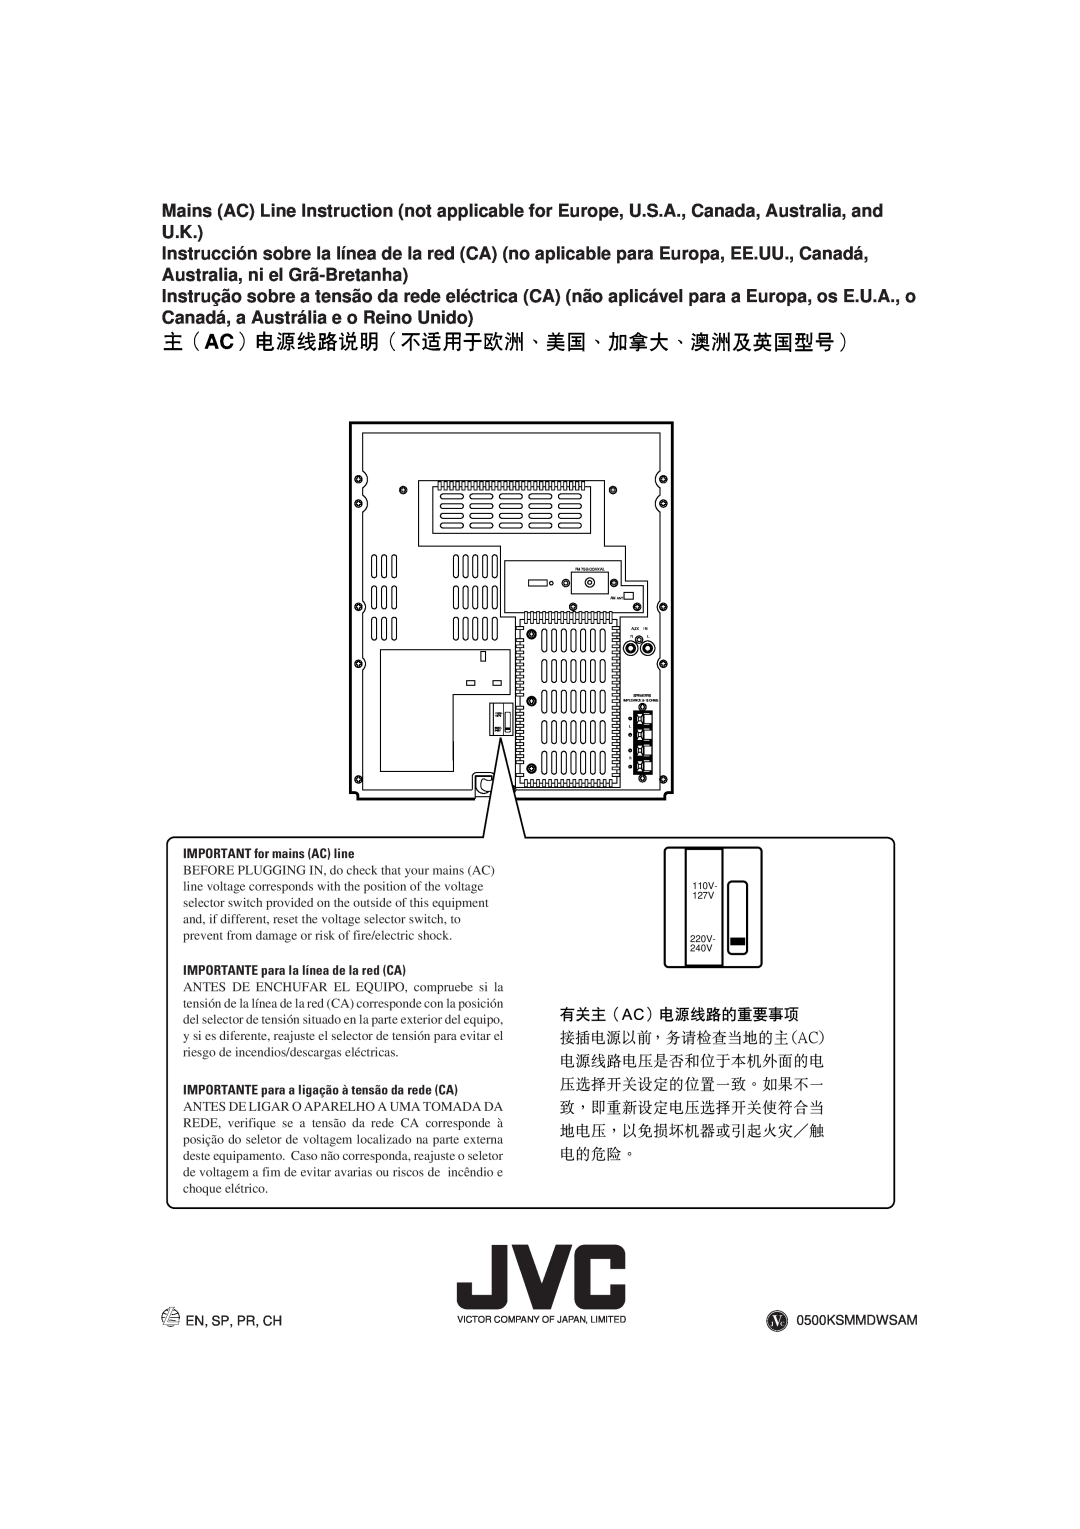 JVC MX-J100 manual IMPORTANT for mains AC line, IMPORTANTE para la línea de la red CA, 0500KSMMDWSAM 